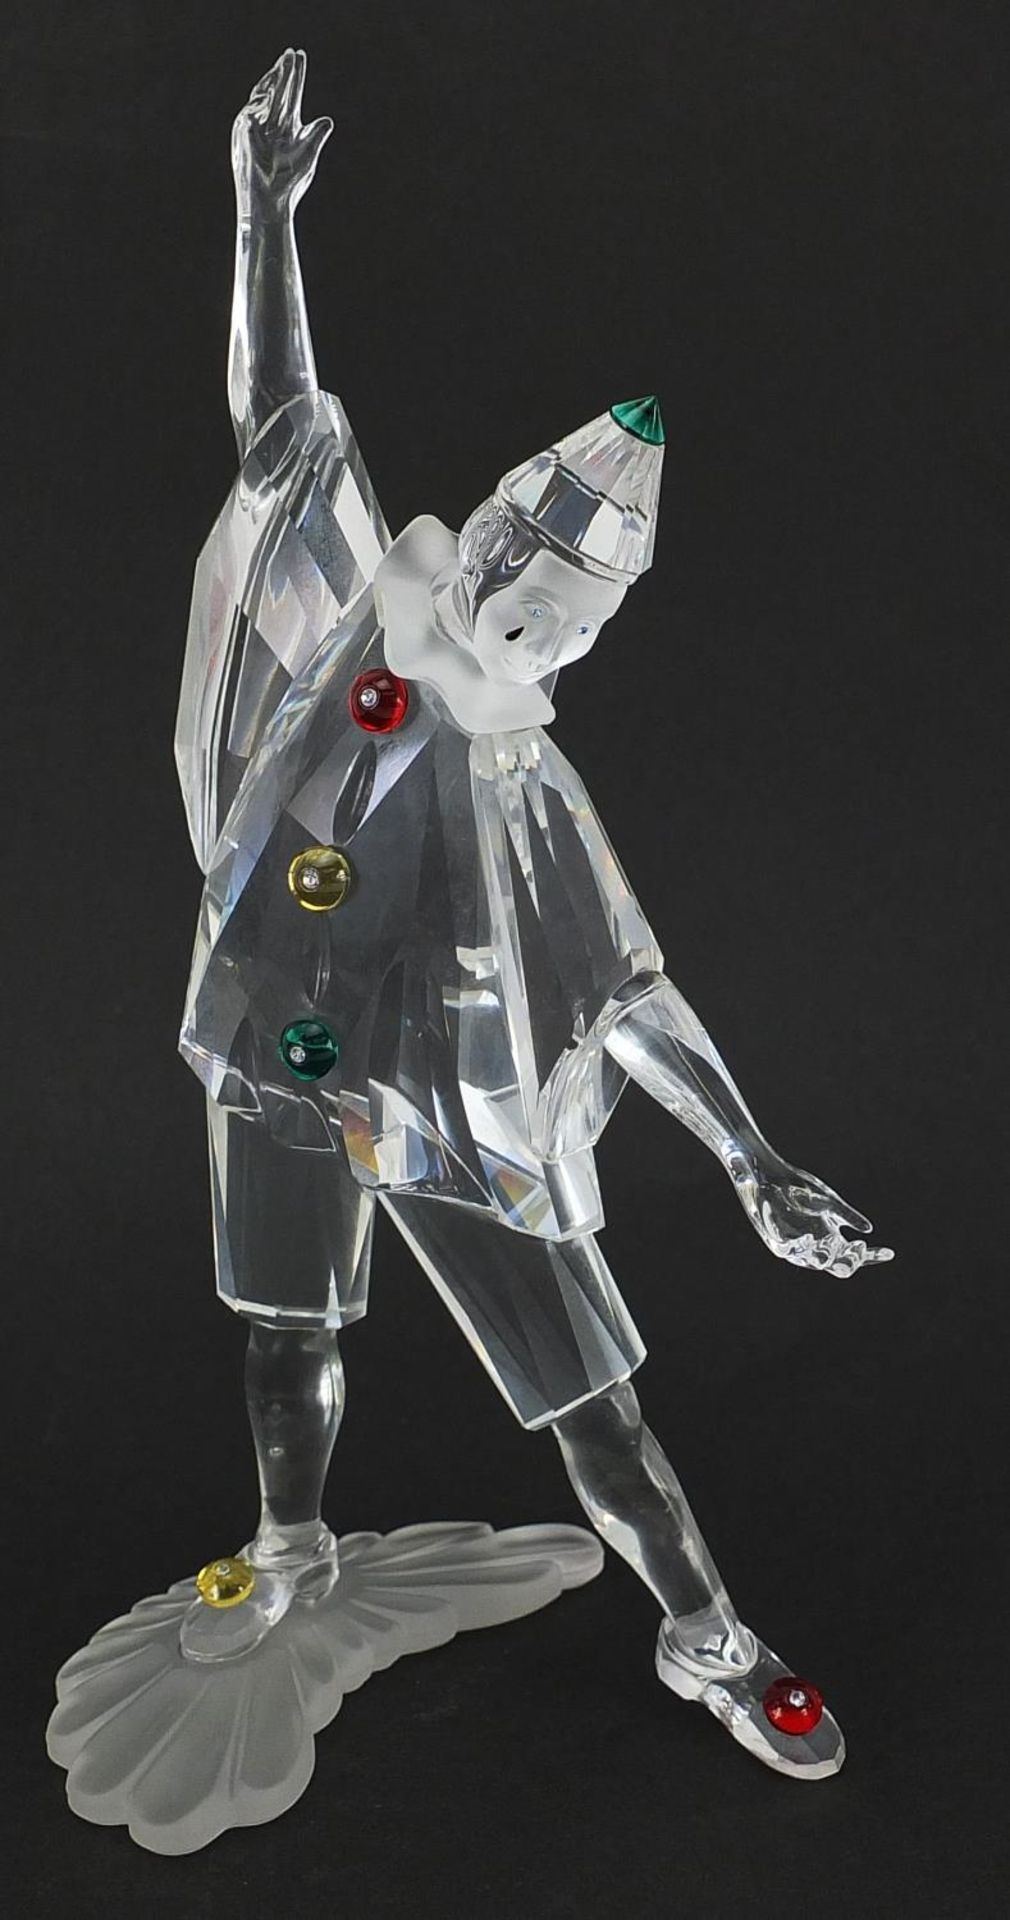 Swarovski crystal Masquerade Pierrot figure with box, 20cm high